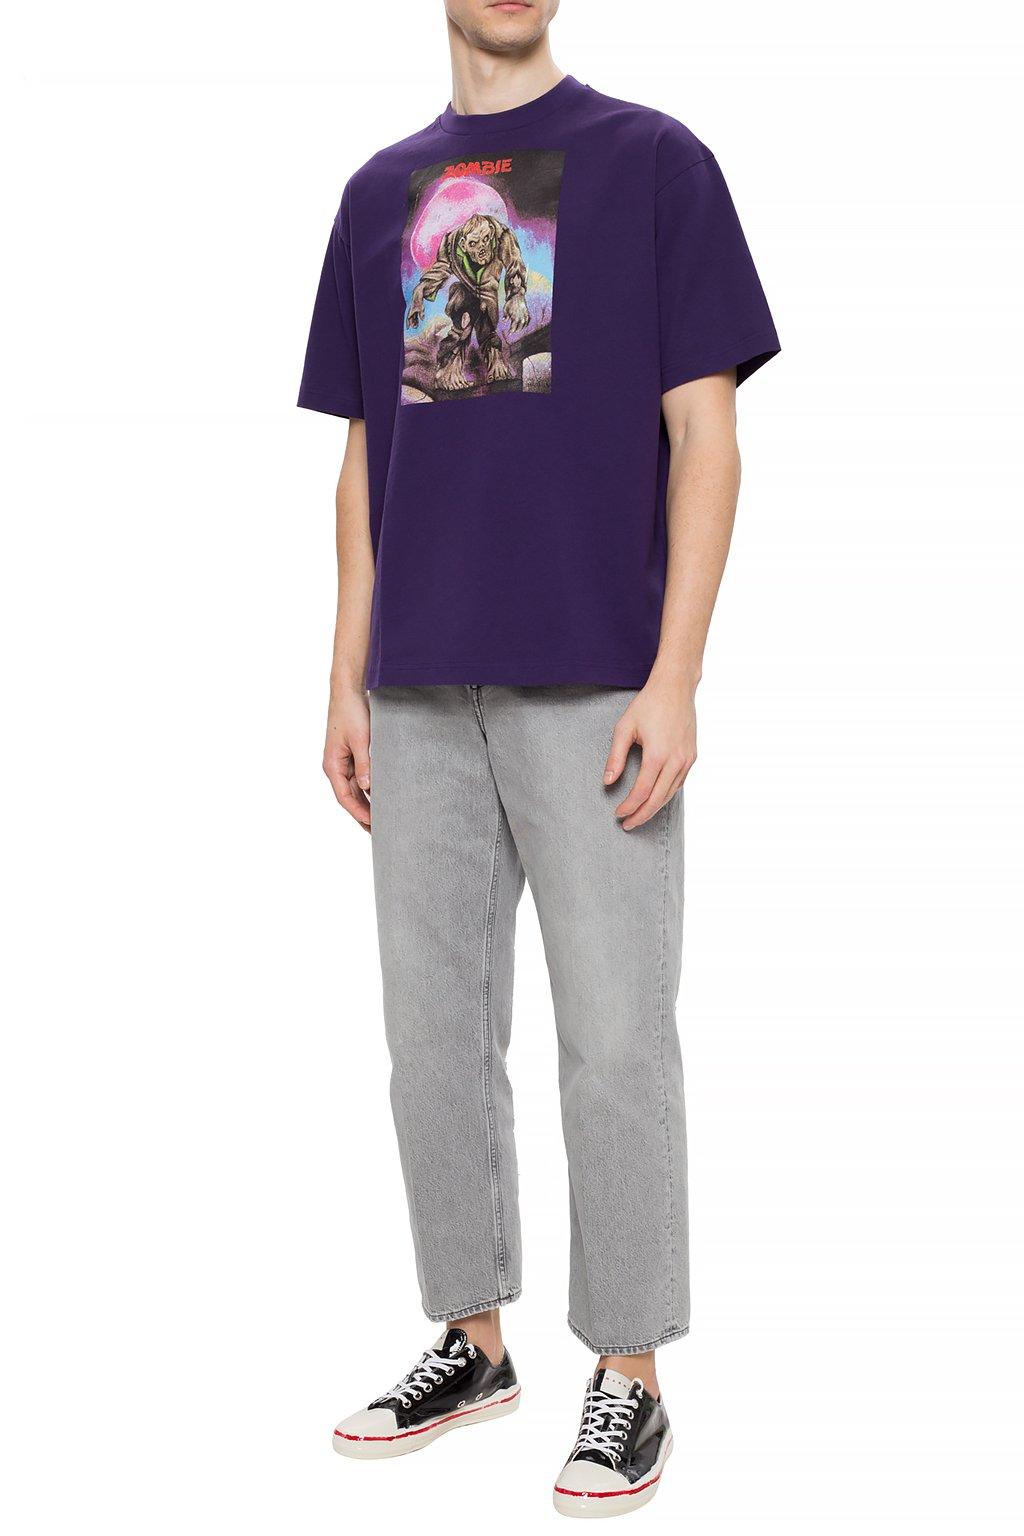 Acne Studios Monster In My Pocket Print T-shirt in Purple for Men 